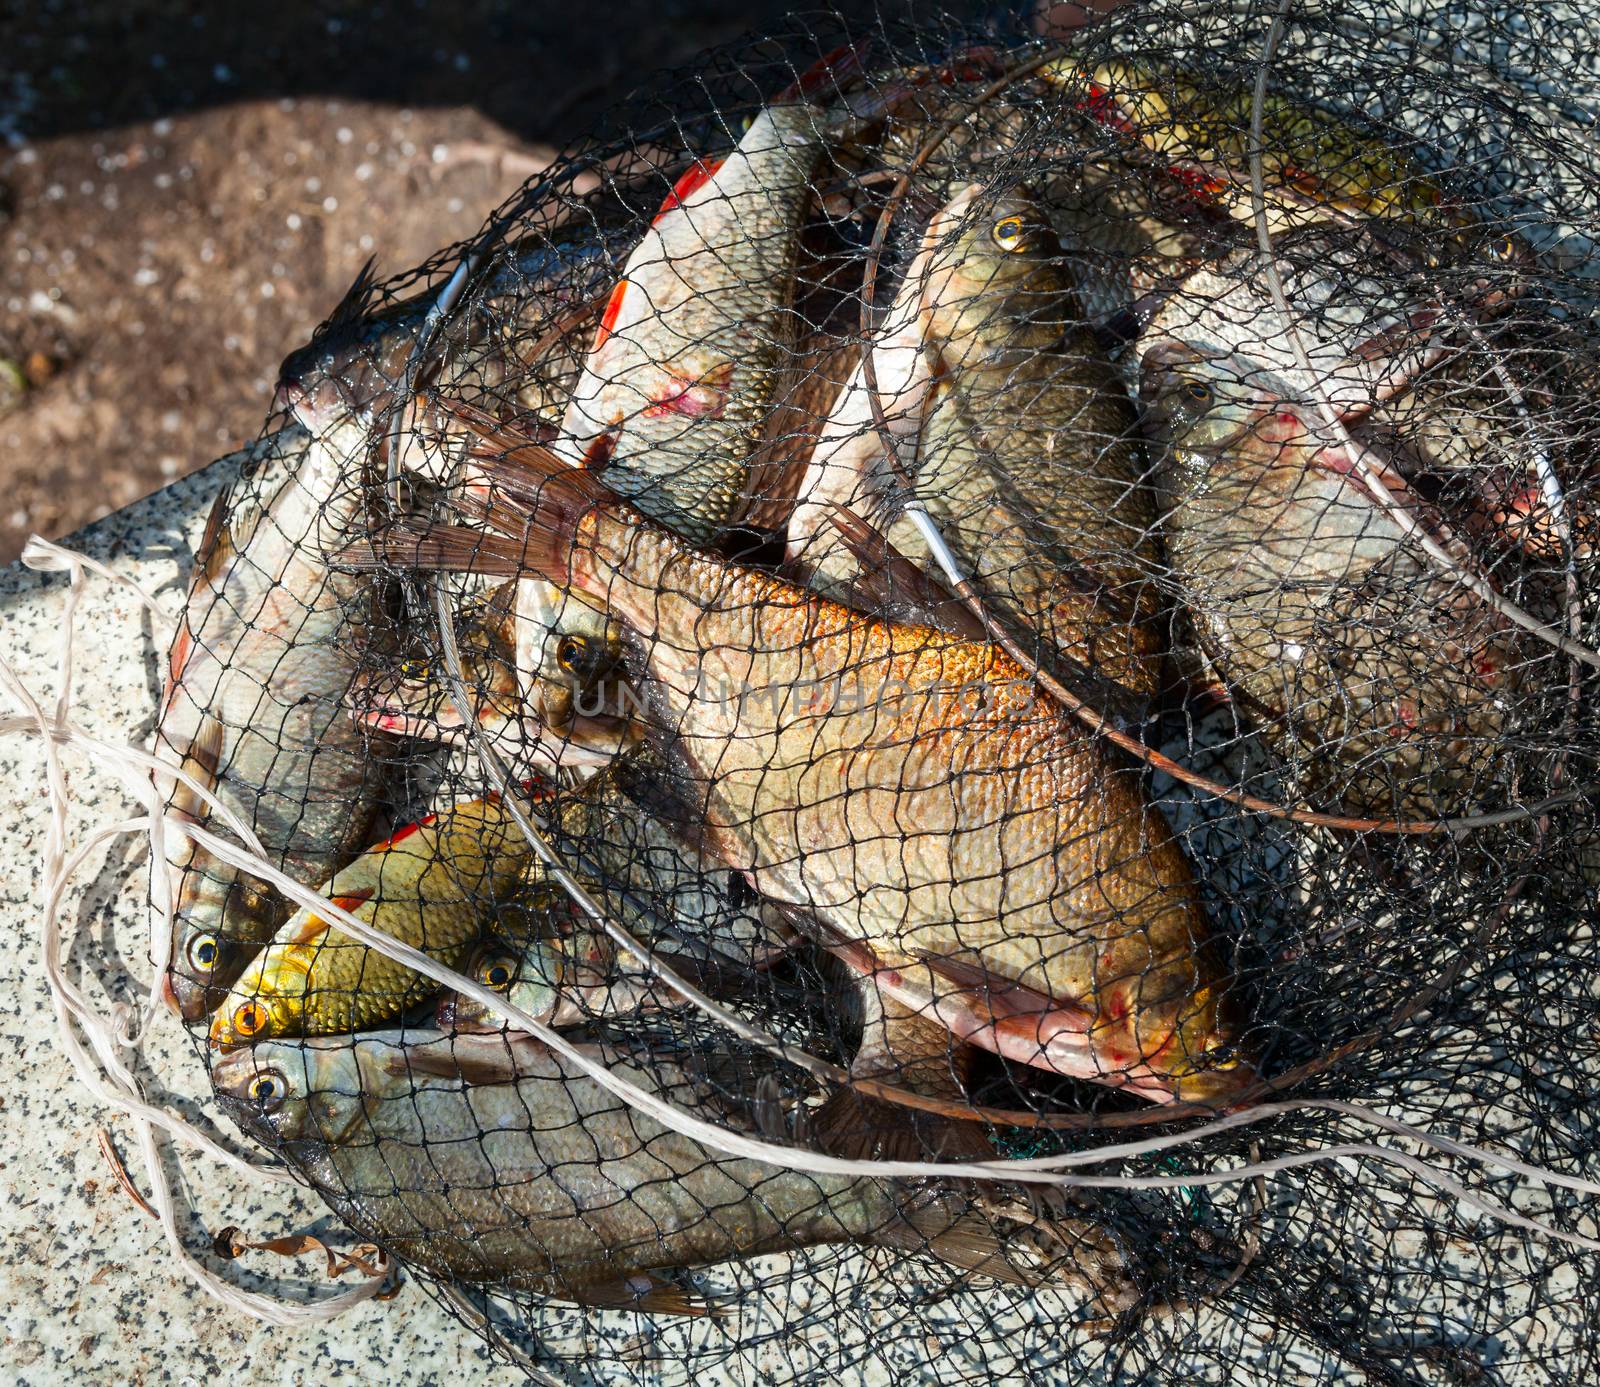 Freshly caught various fresh-water fish in a net